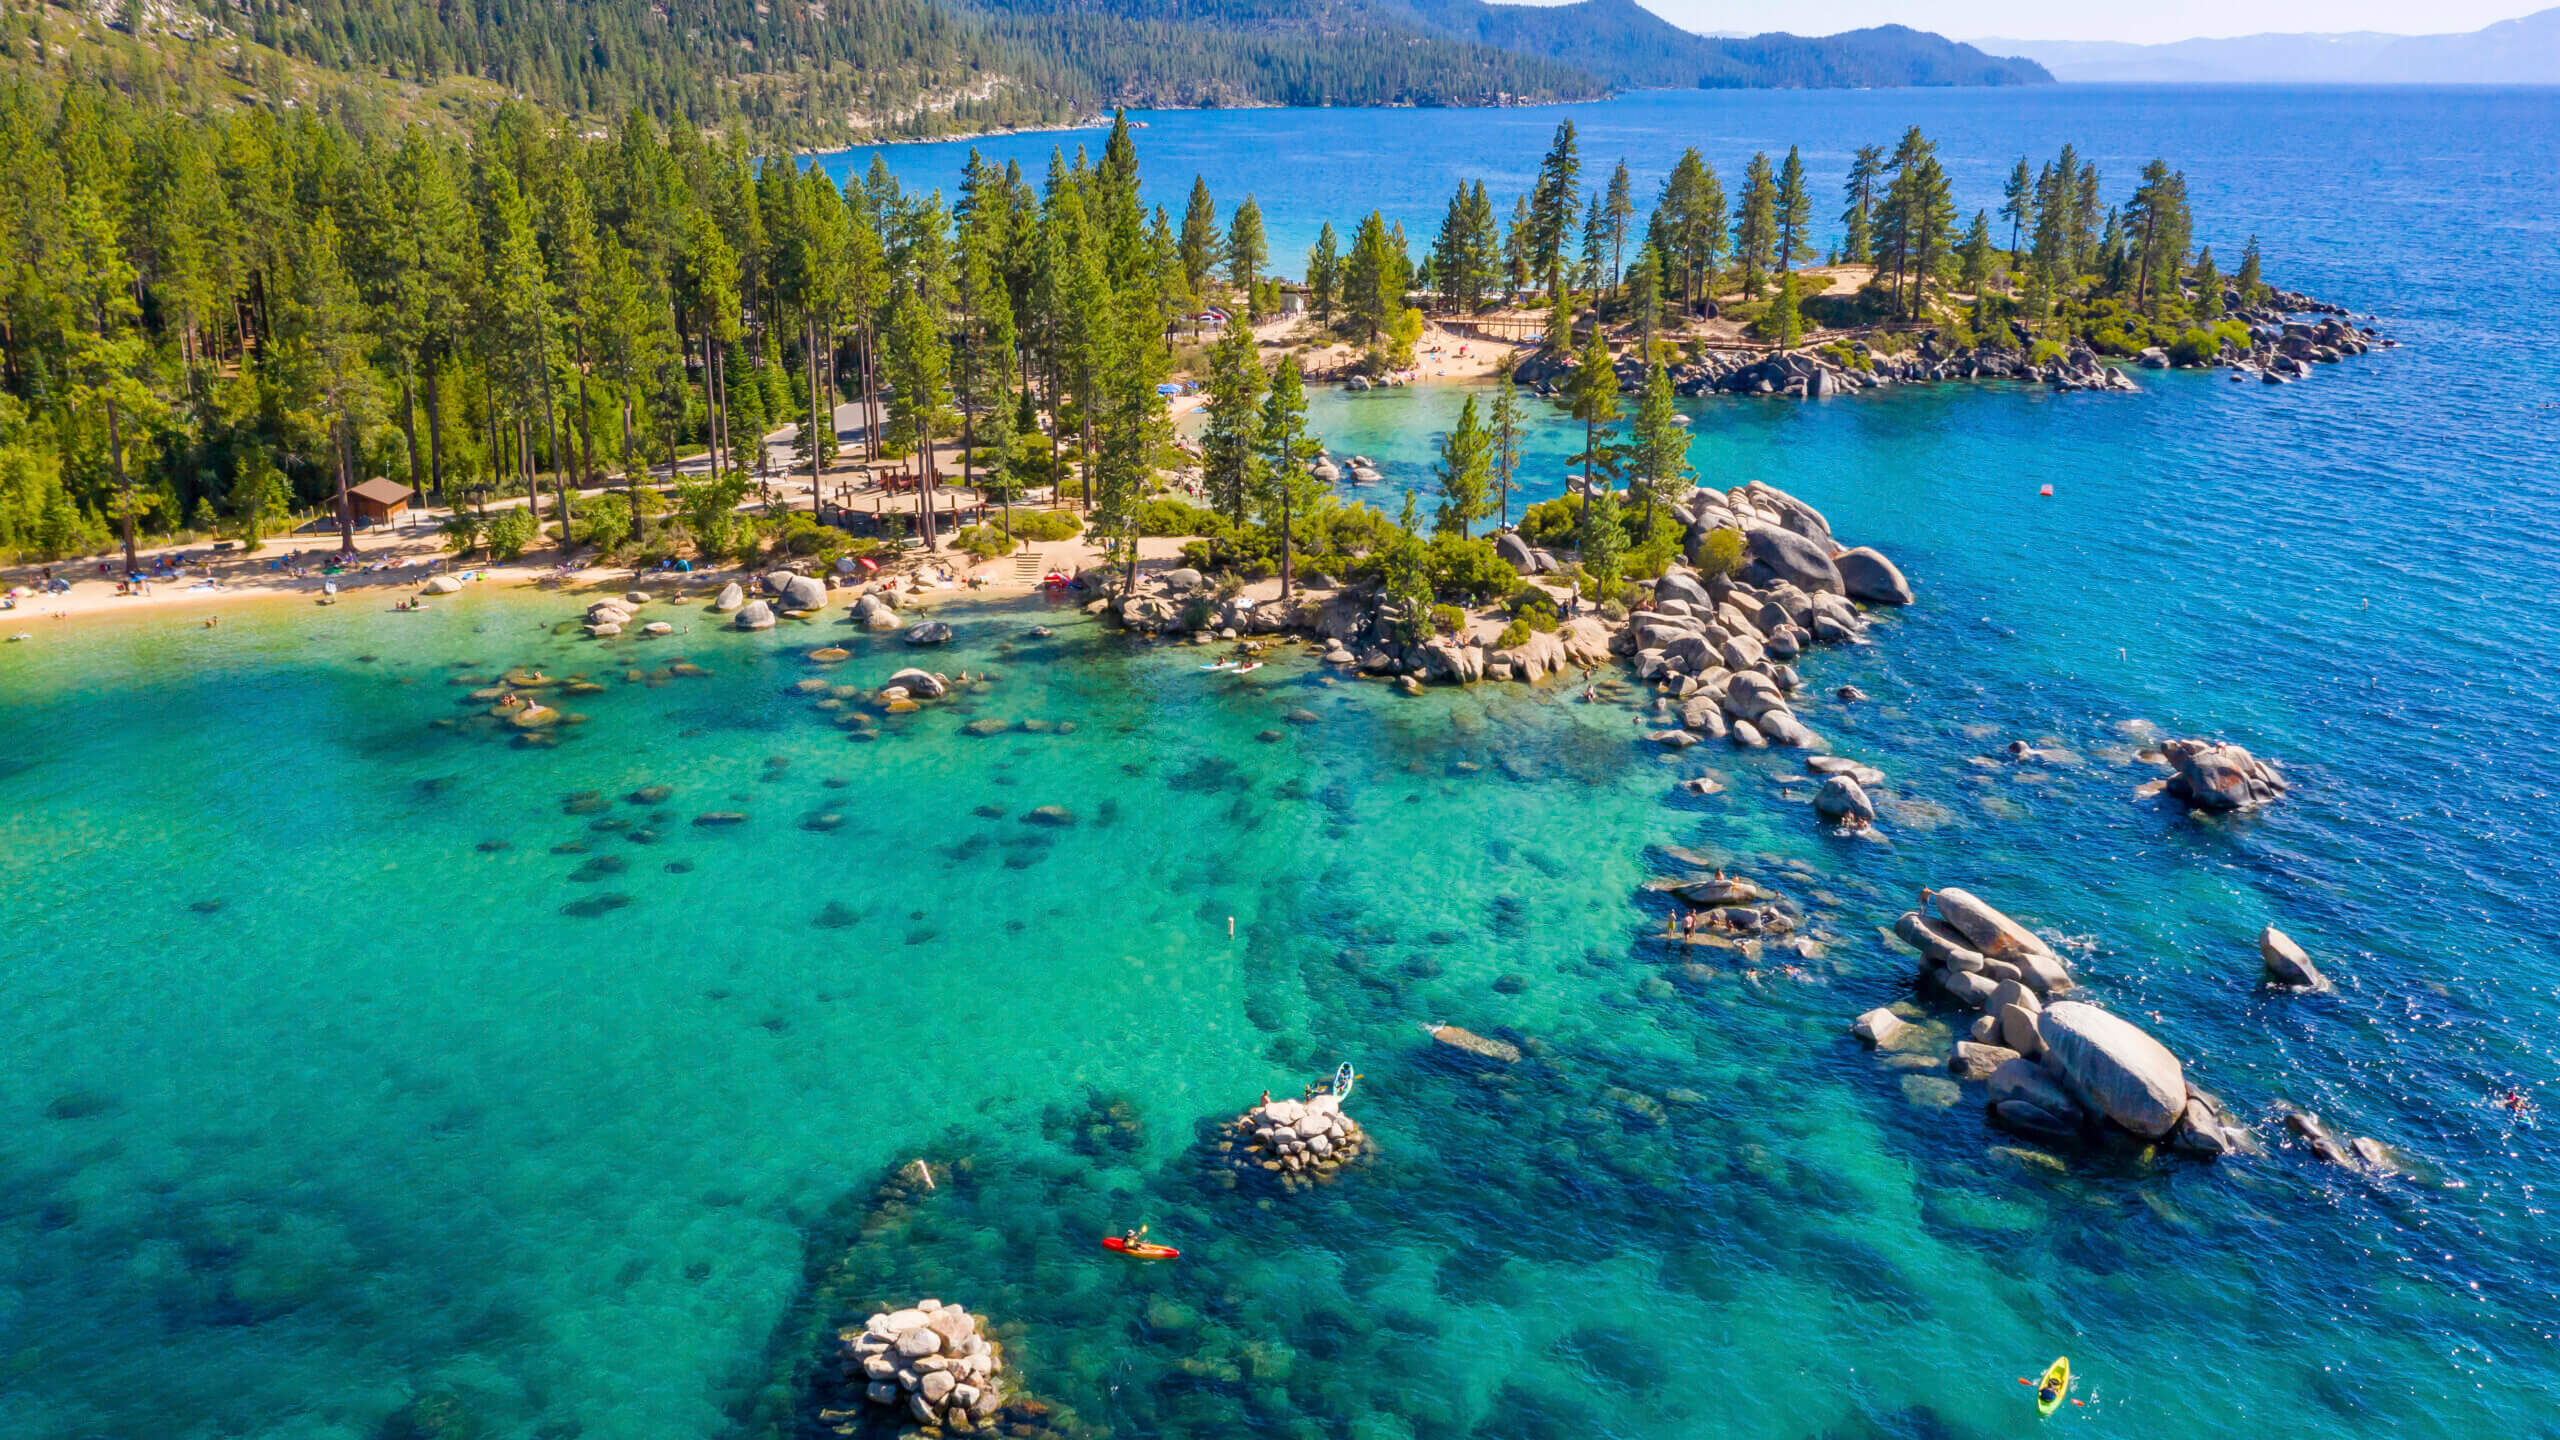 should i visit north or south lake tahoe